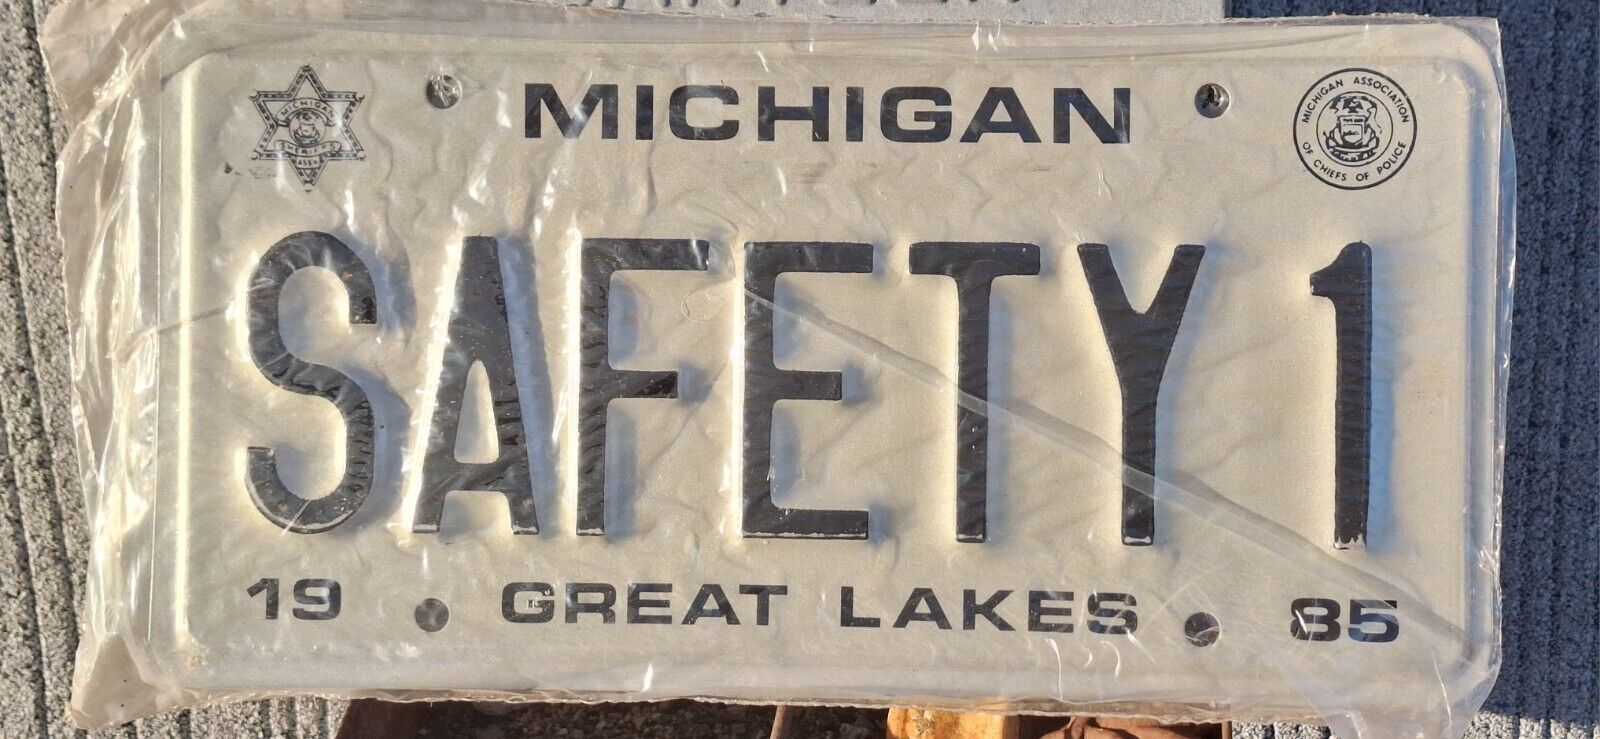 1985 Michigan SHERIFFS ASSOCIATION License Plate Booster SAFETY 1 - NOS 